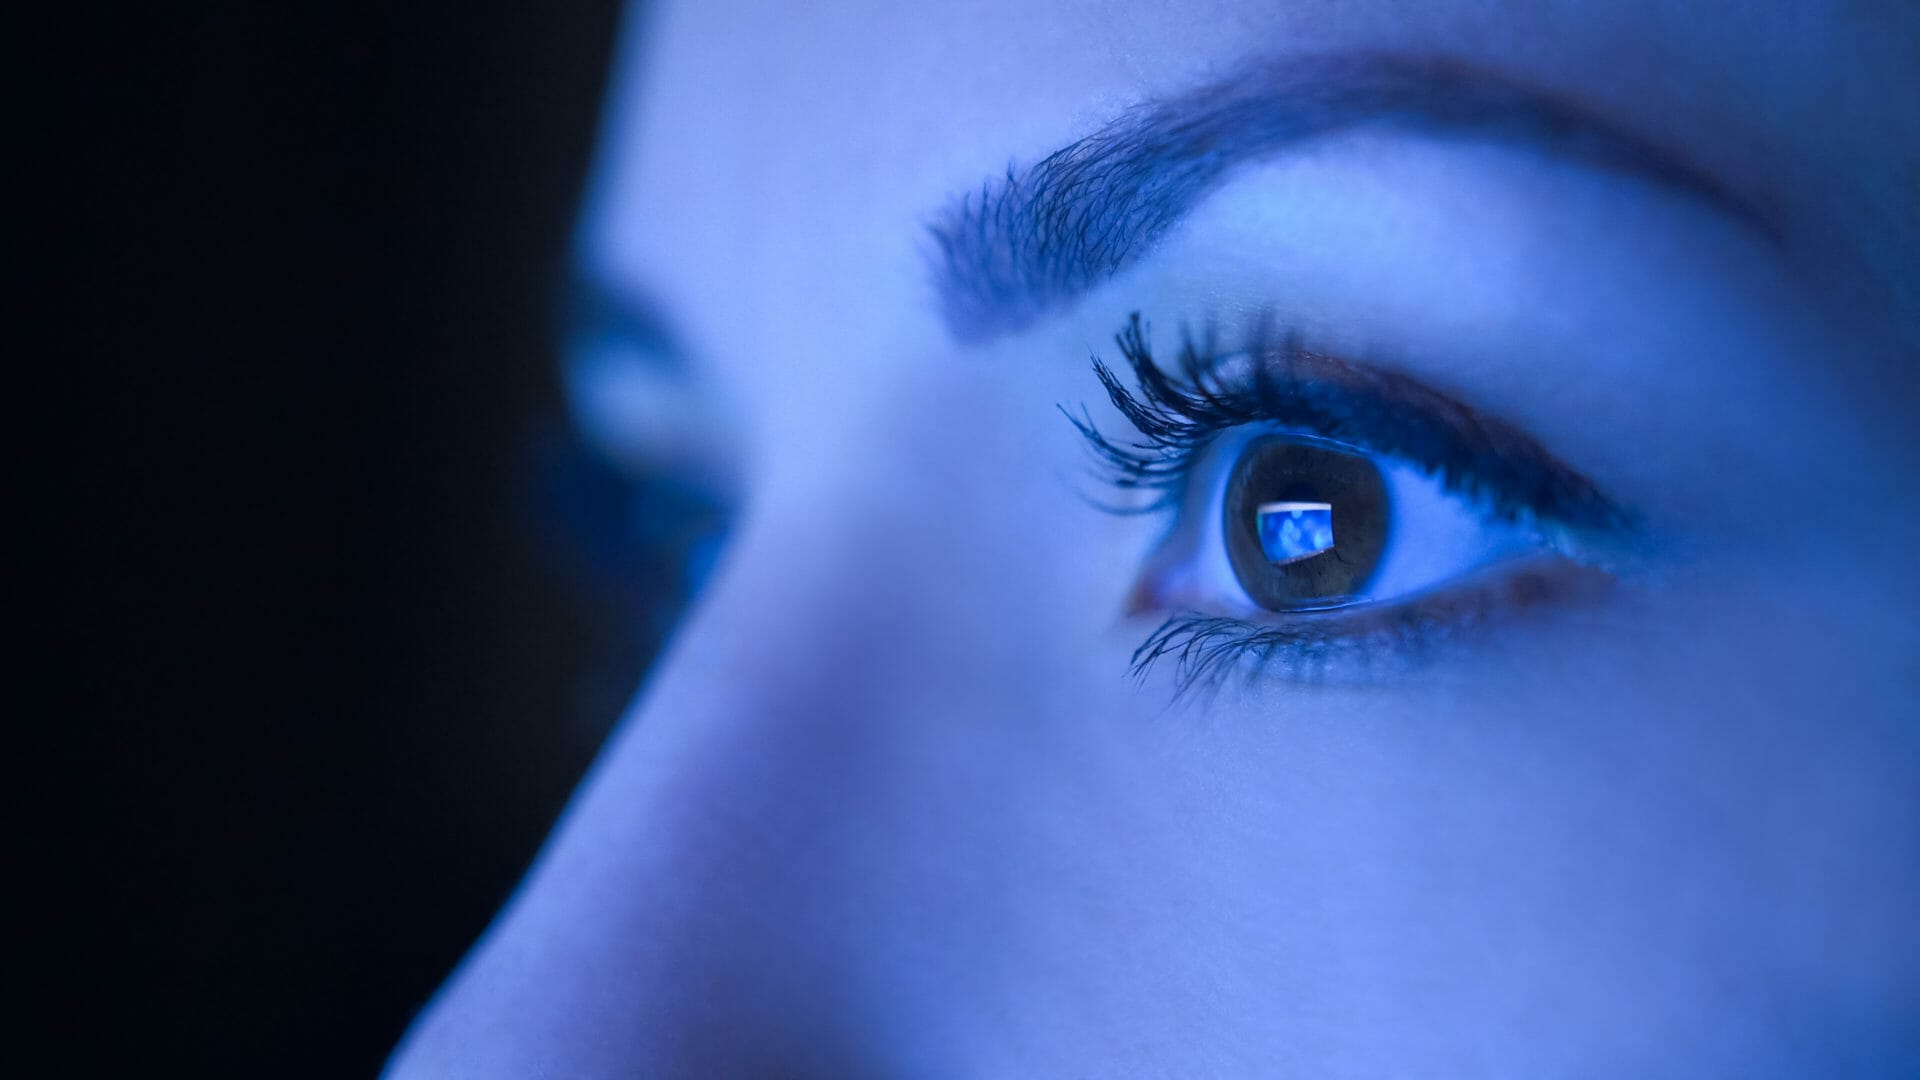 Blue light hitting a woman's eye